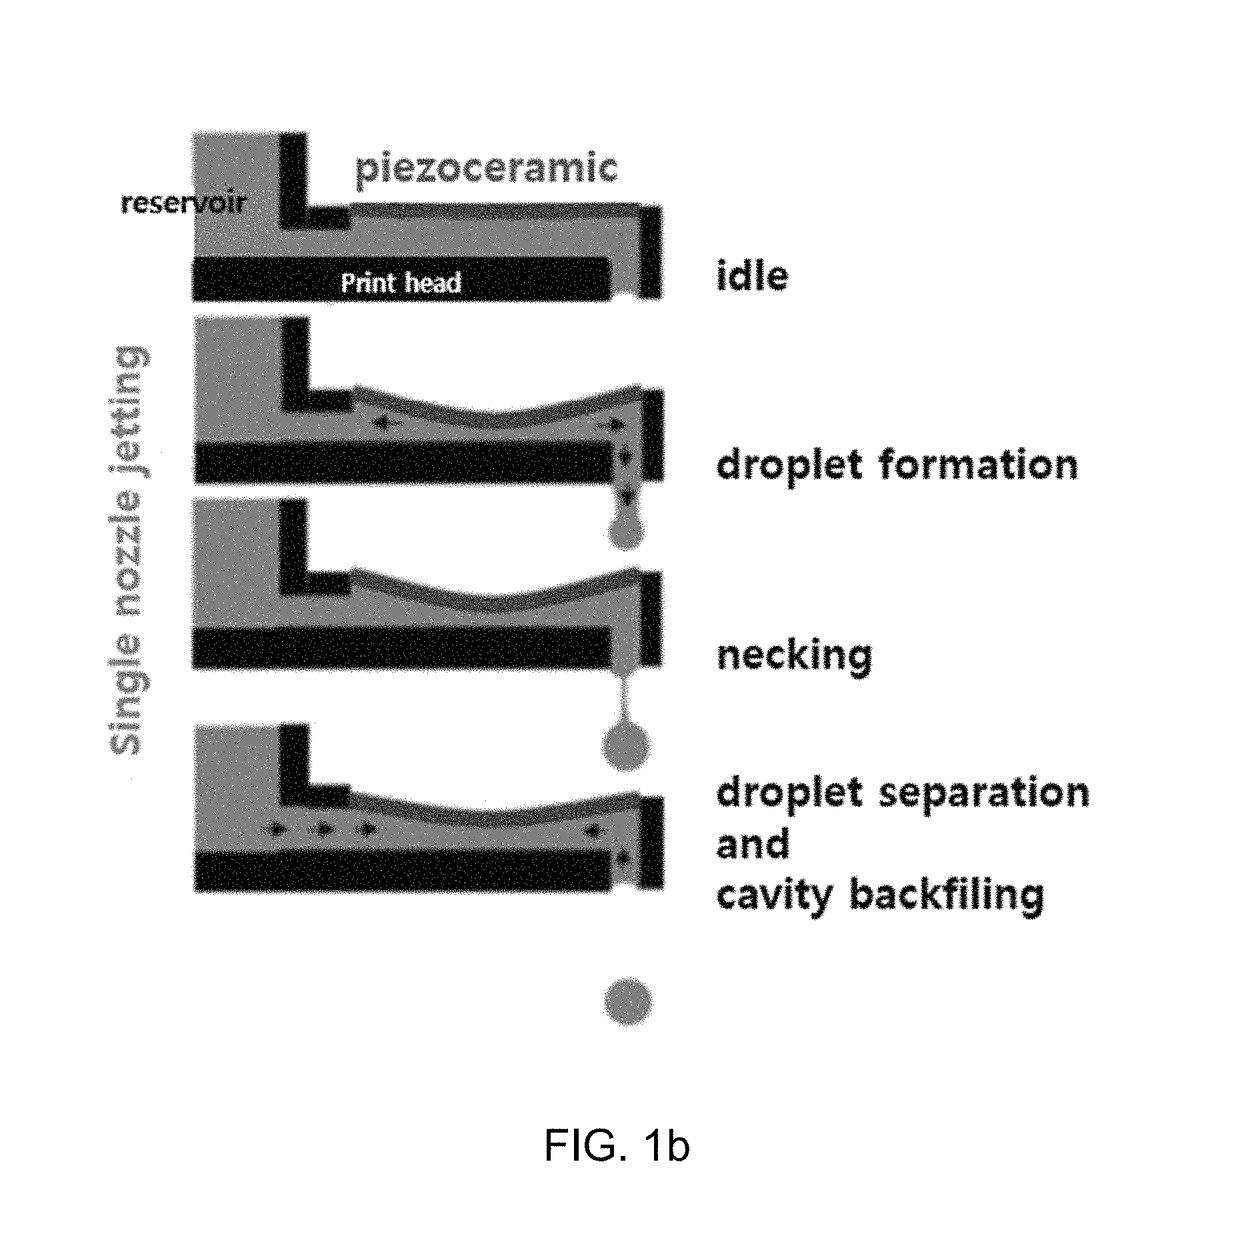 Method for manufacturing modular microfluidic paper chips using inkjet printing